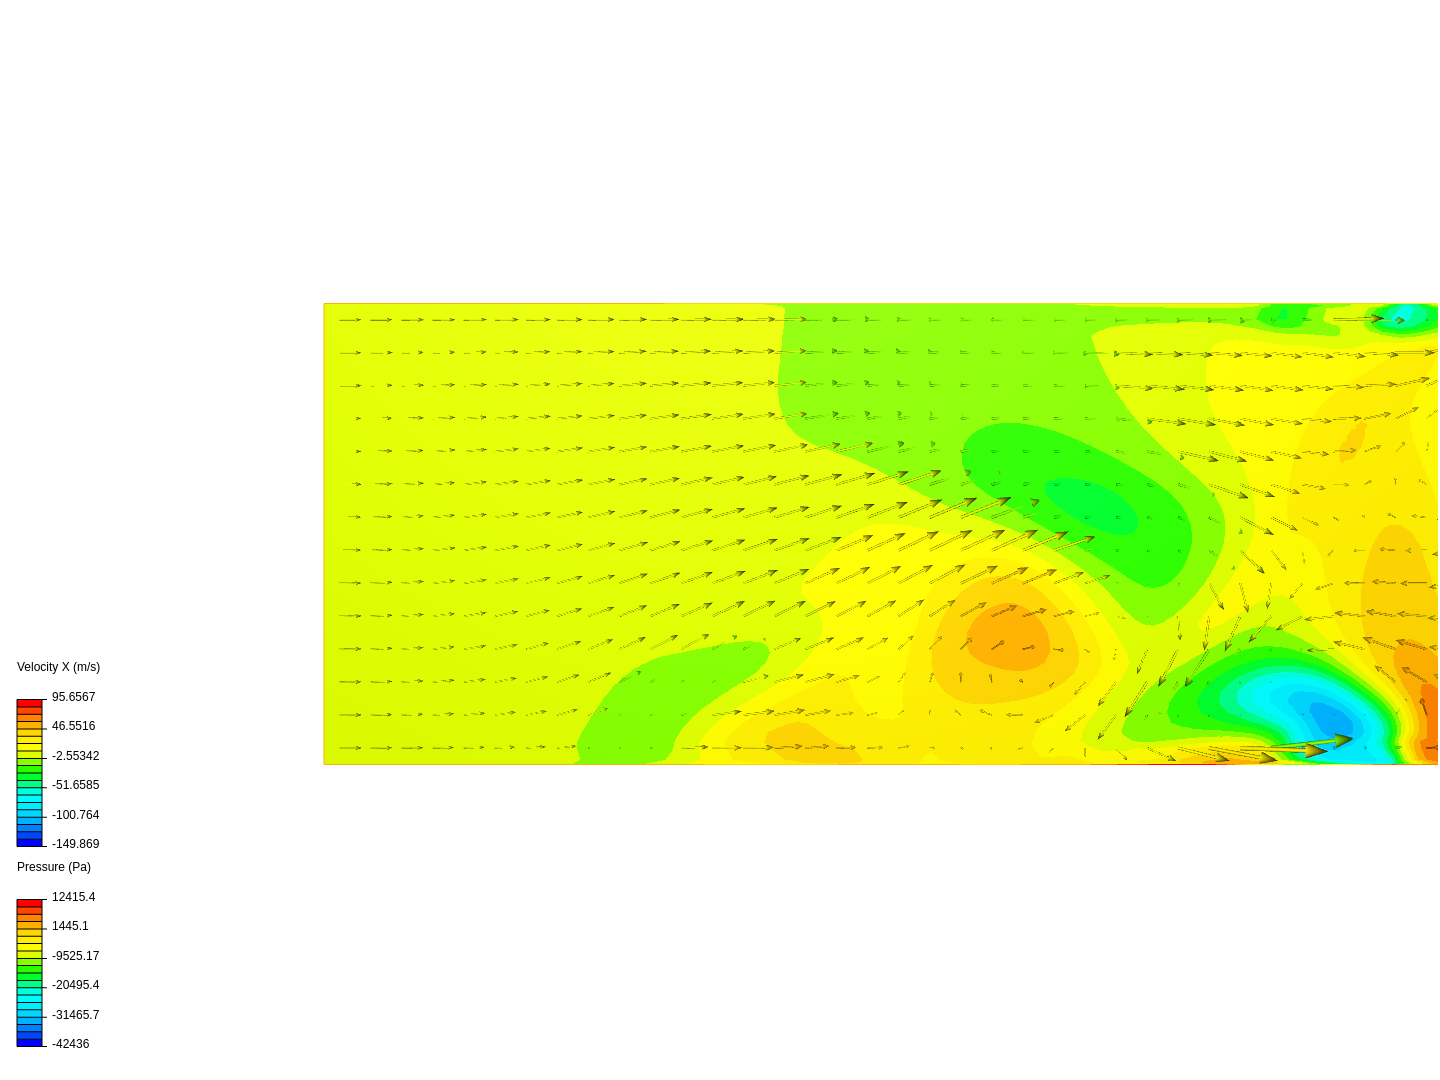 Aero Dynamic analysis of a bi-plane image